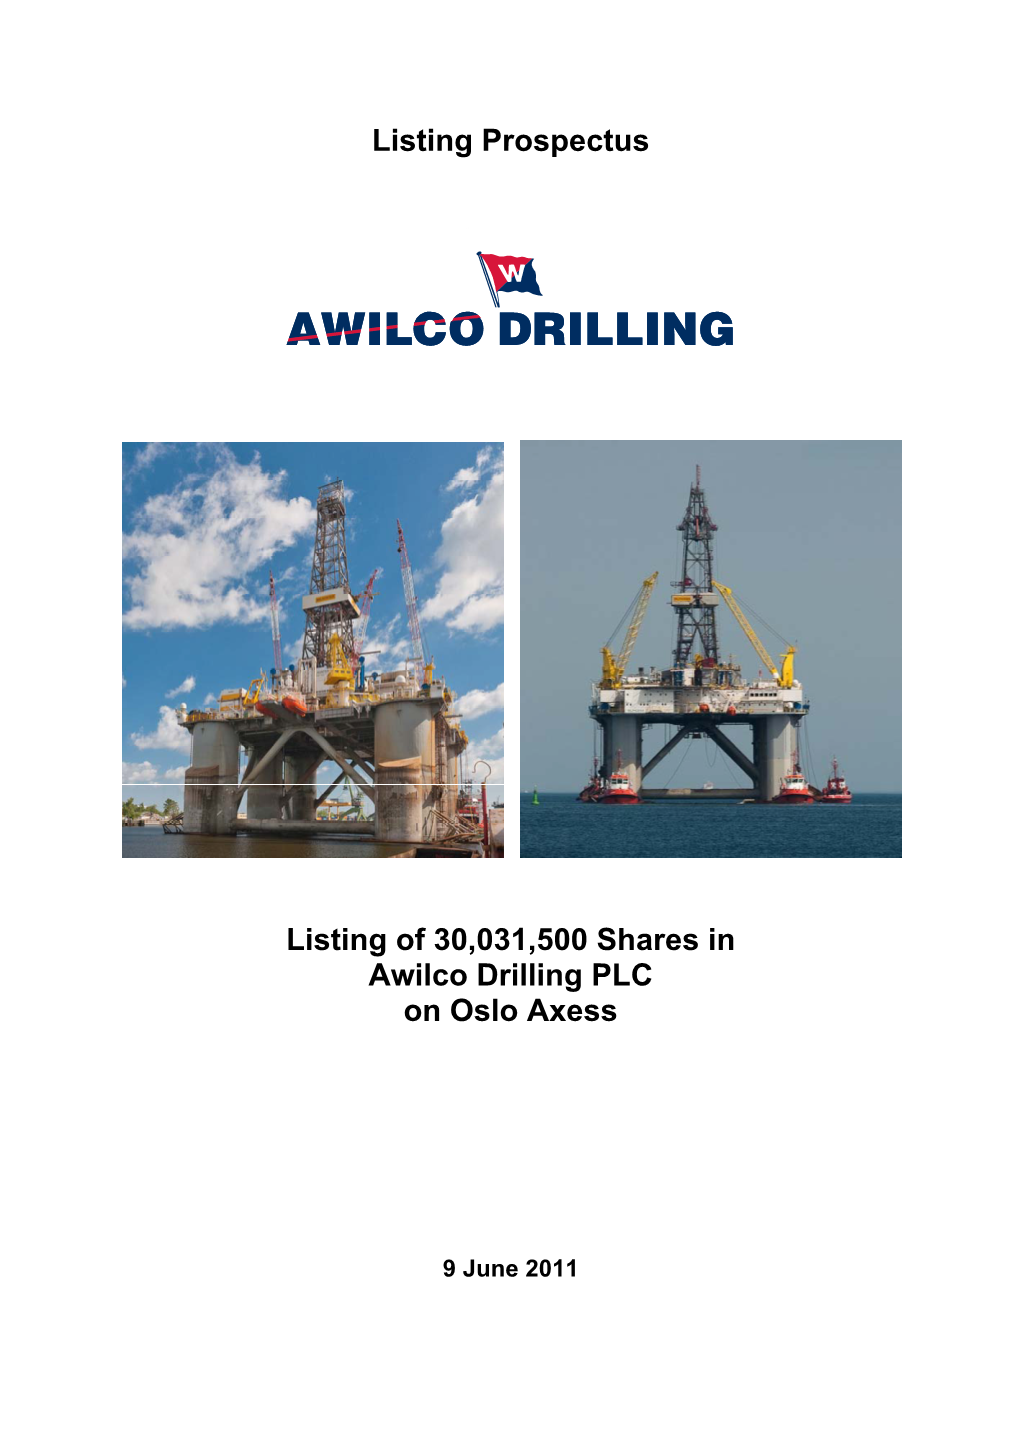 Awilco Drilling PLC Listing Prospectus June 2011